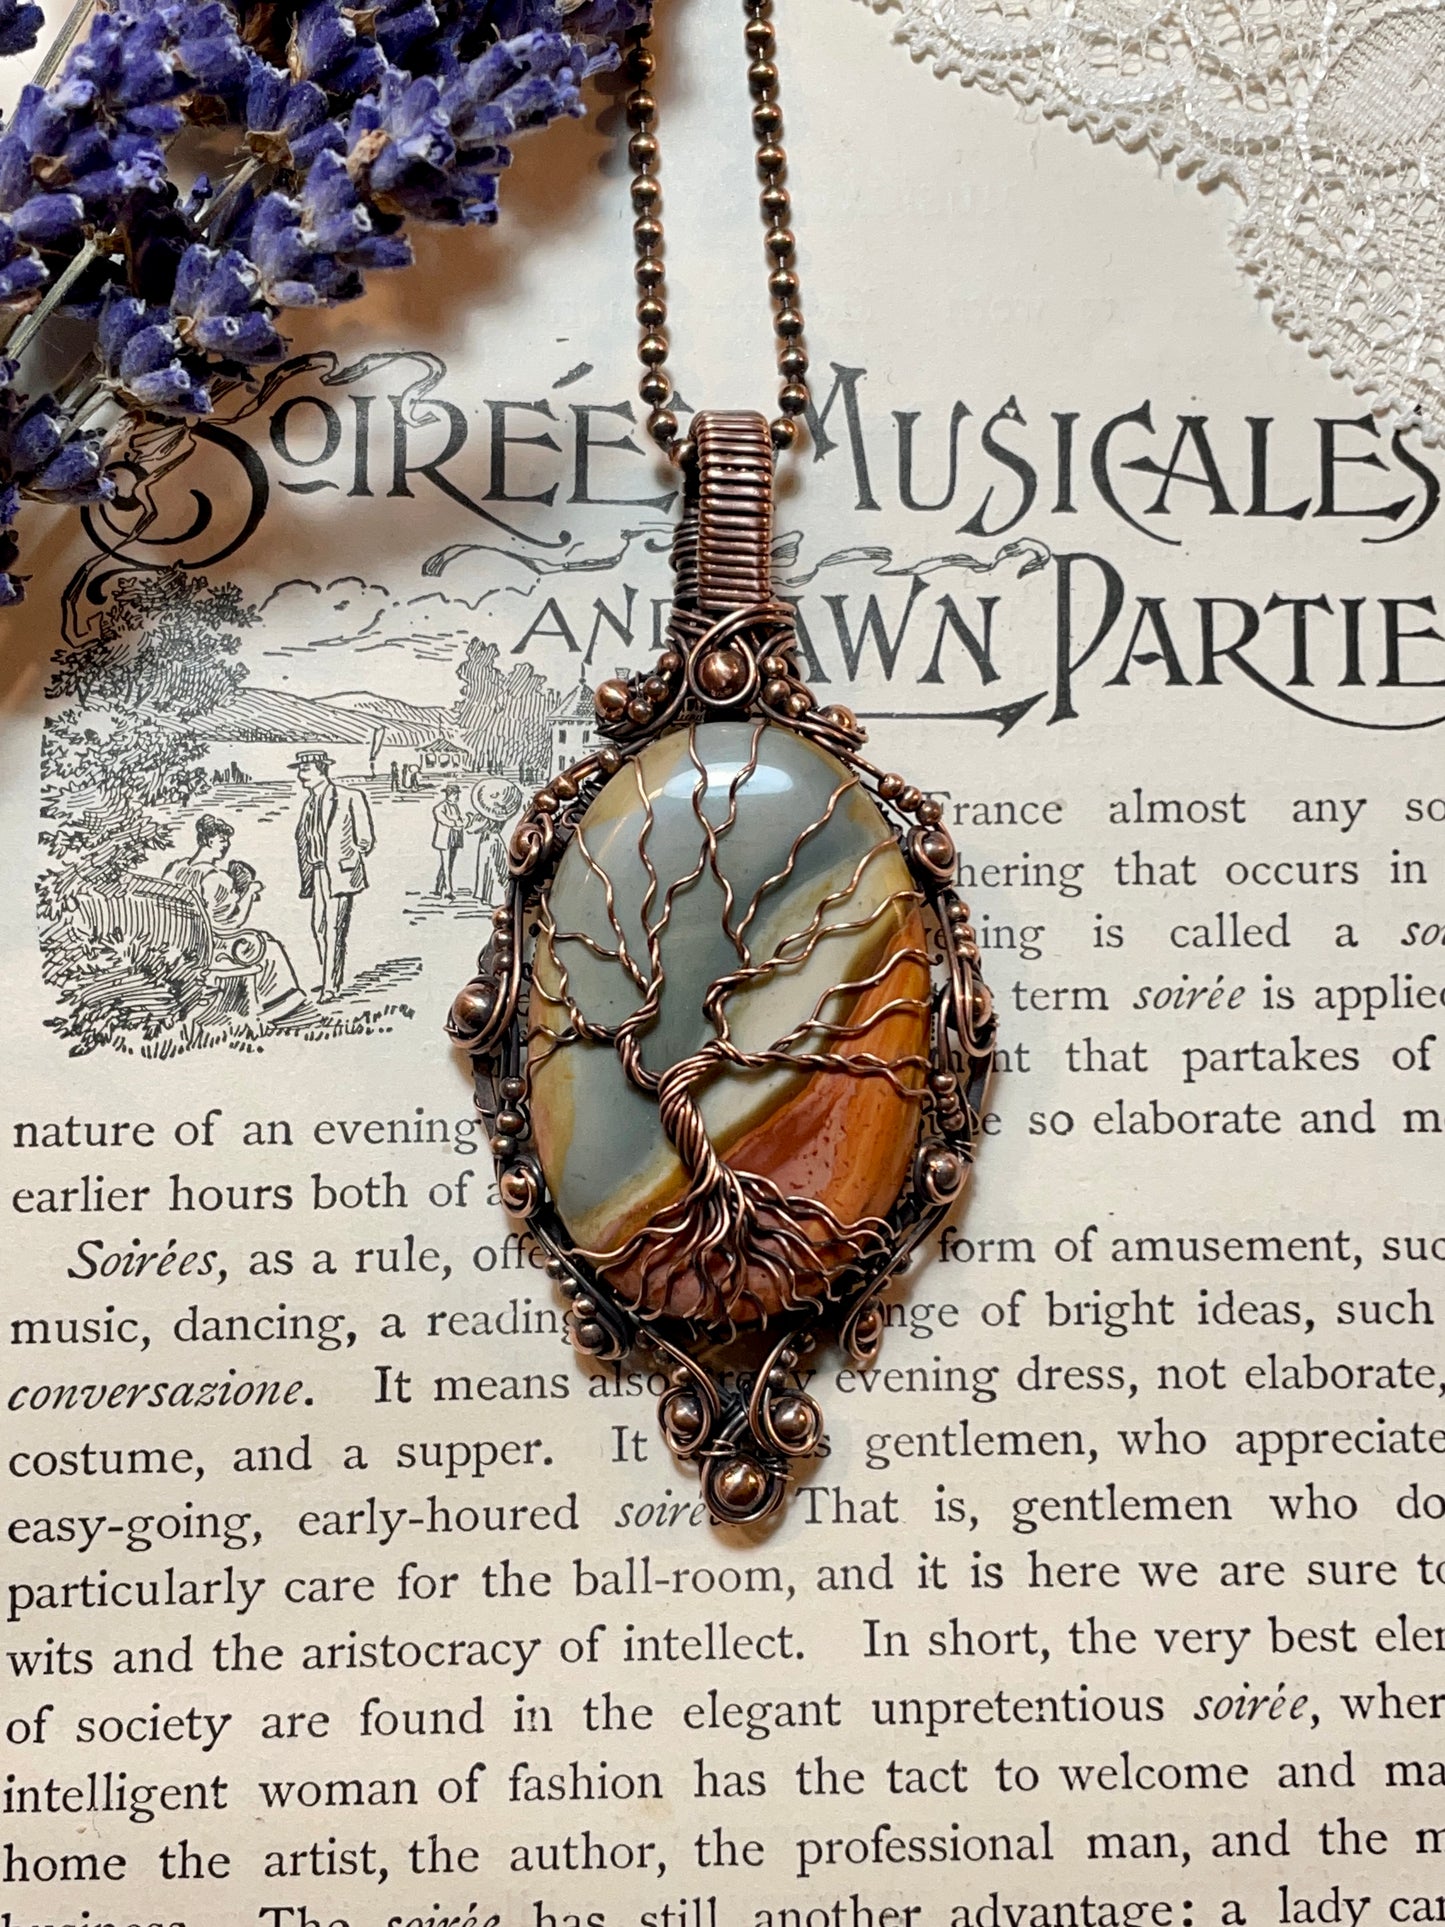 Polychrome Jasper Tree of Life Amulet in Copper